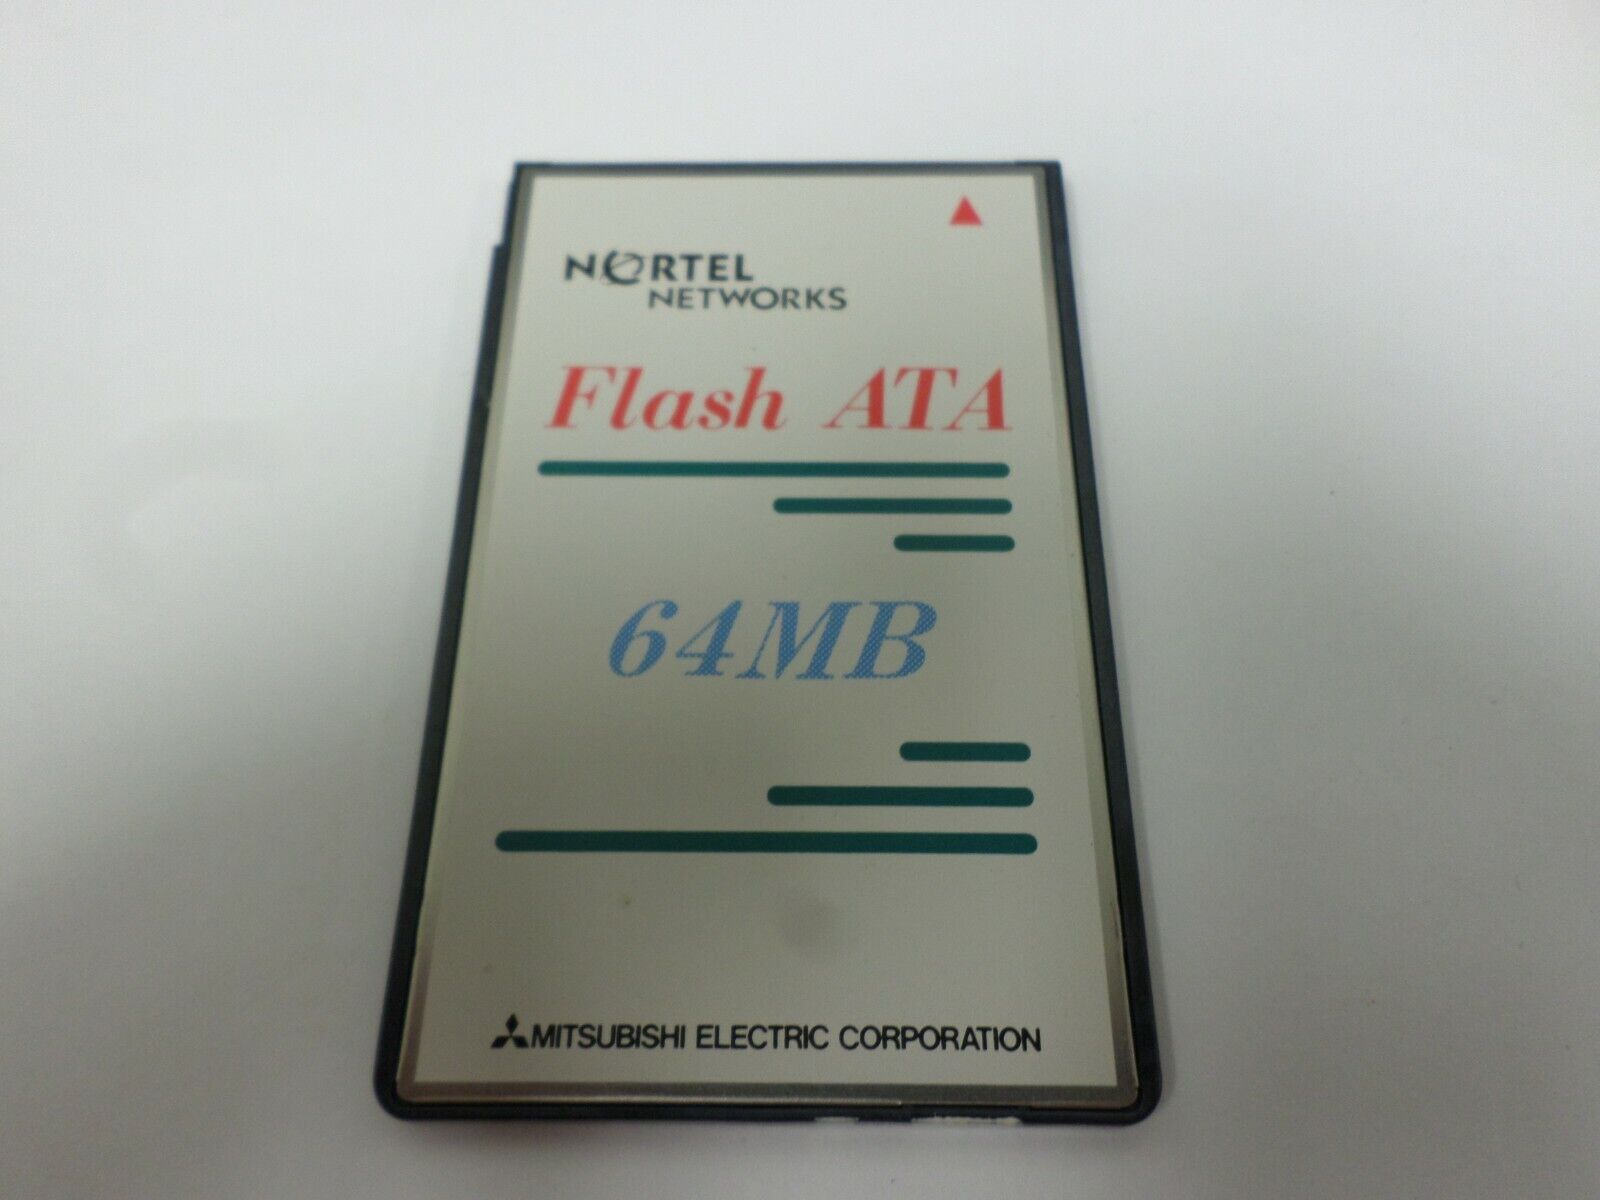 Nortel Networks NTSX06BA 64MB Flash ATA Card 